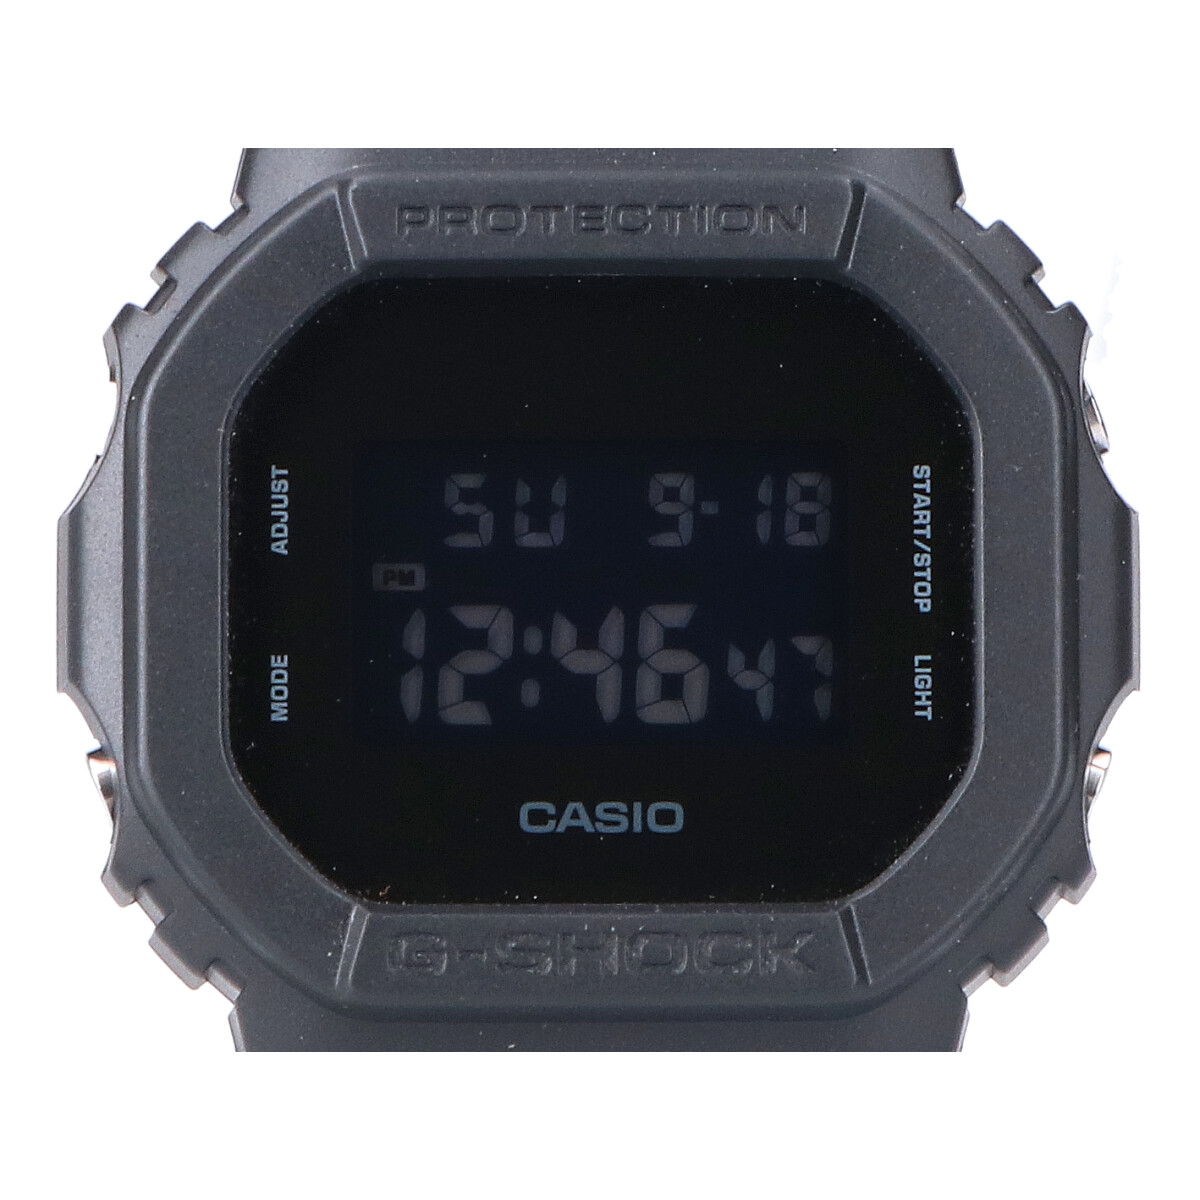 G-SHOCKの×コムデギャルソン ブラックマーケット限定 2021年秋冬 OH-K901-051-1-1 DW-5600BB 腕時計の買取実績です。